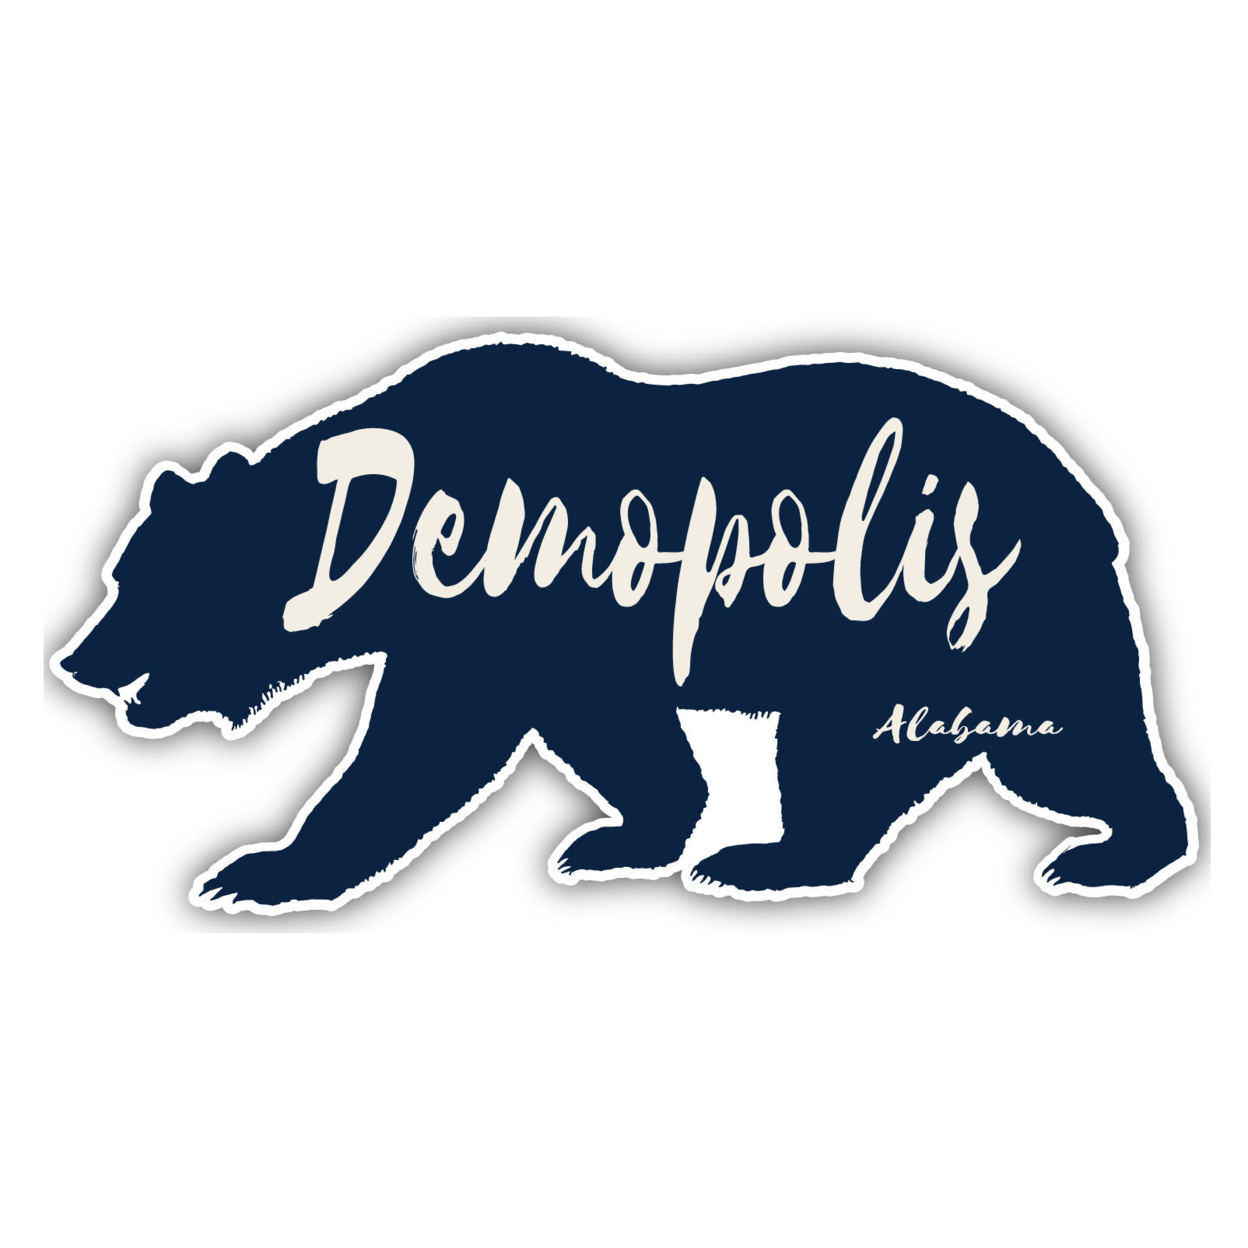 Demopolis Alabama Souvenir Decorative Stickers (Choose Theme And Size) - 4-Pack, 4-Inch, Bear